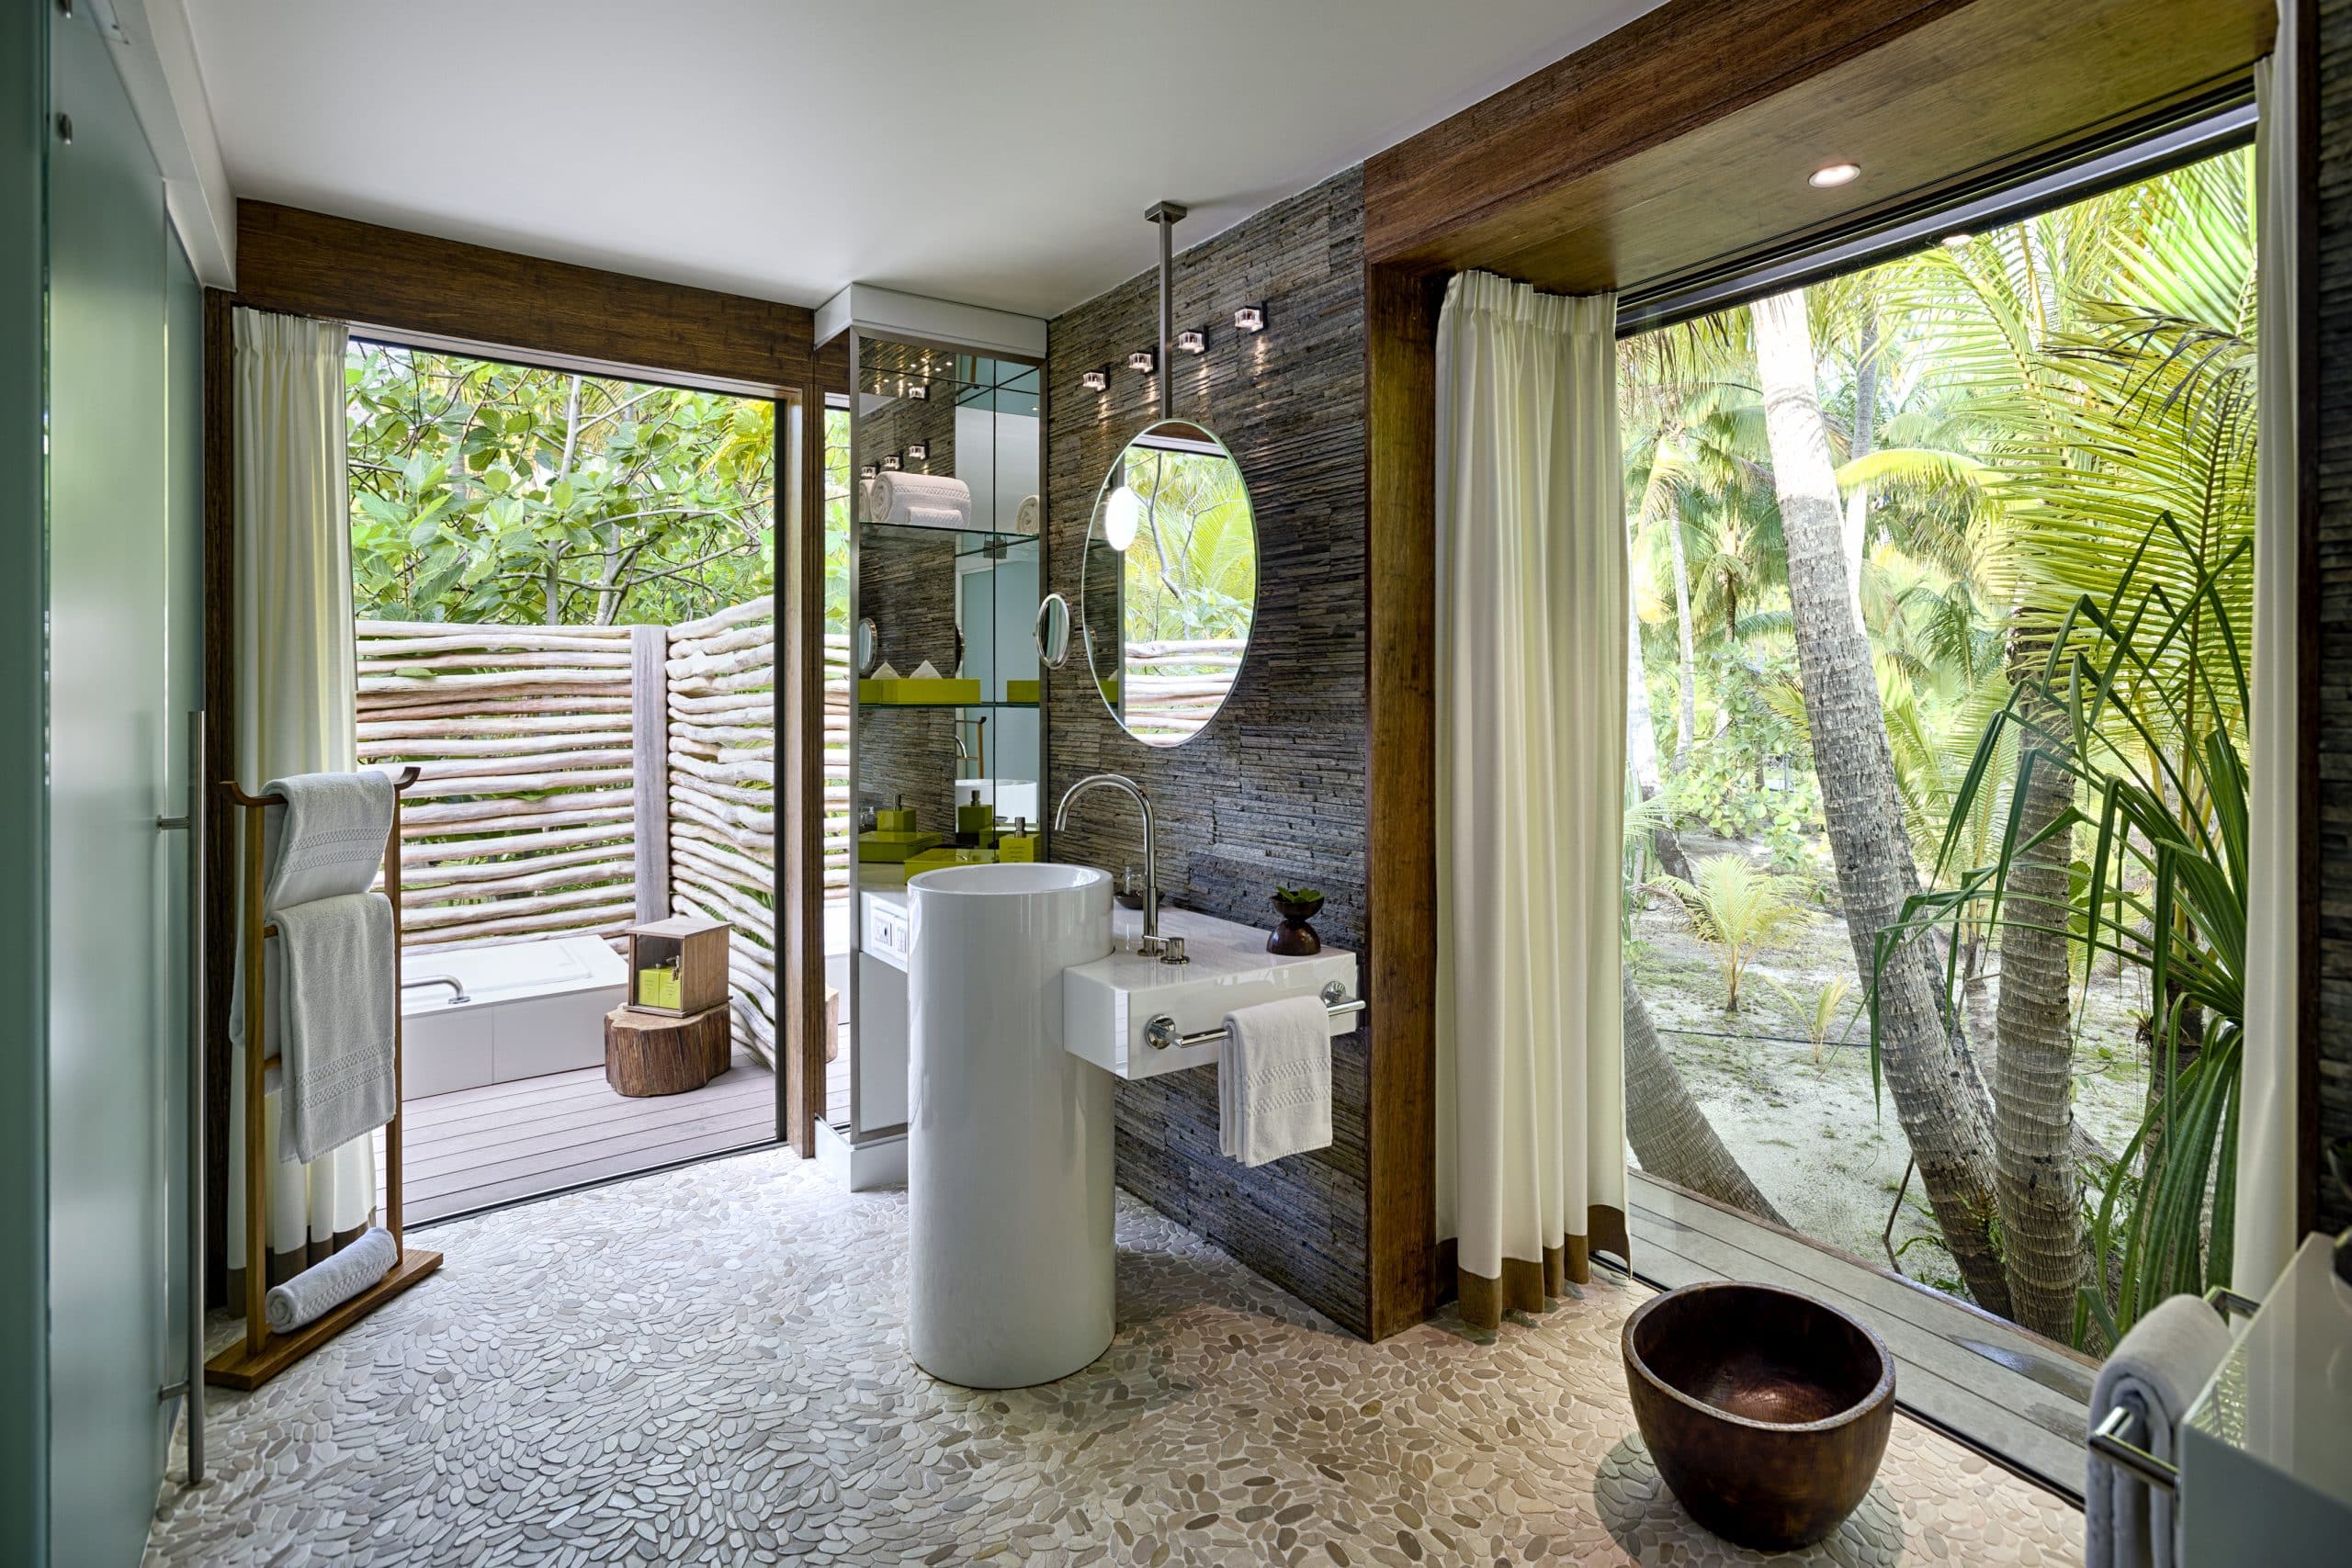 The Brandohotel chambre salle bain polynesie francaise ocean pacifique baie vitree vue exterieure